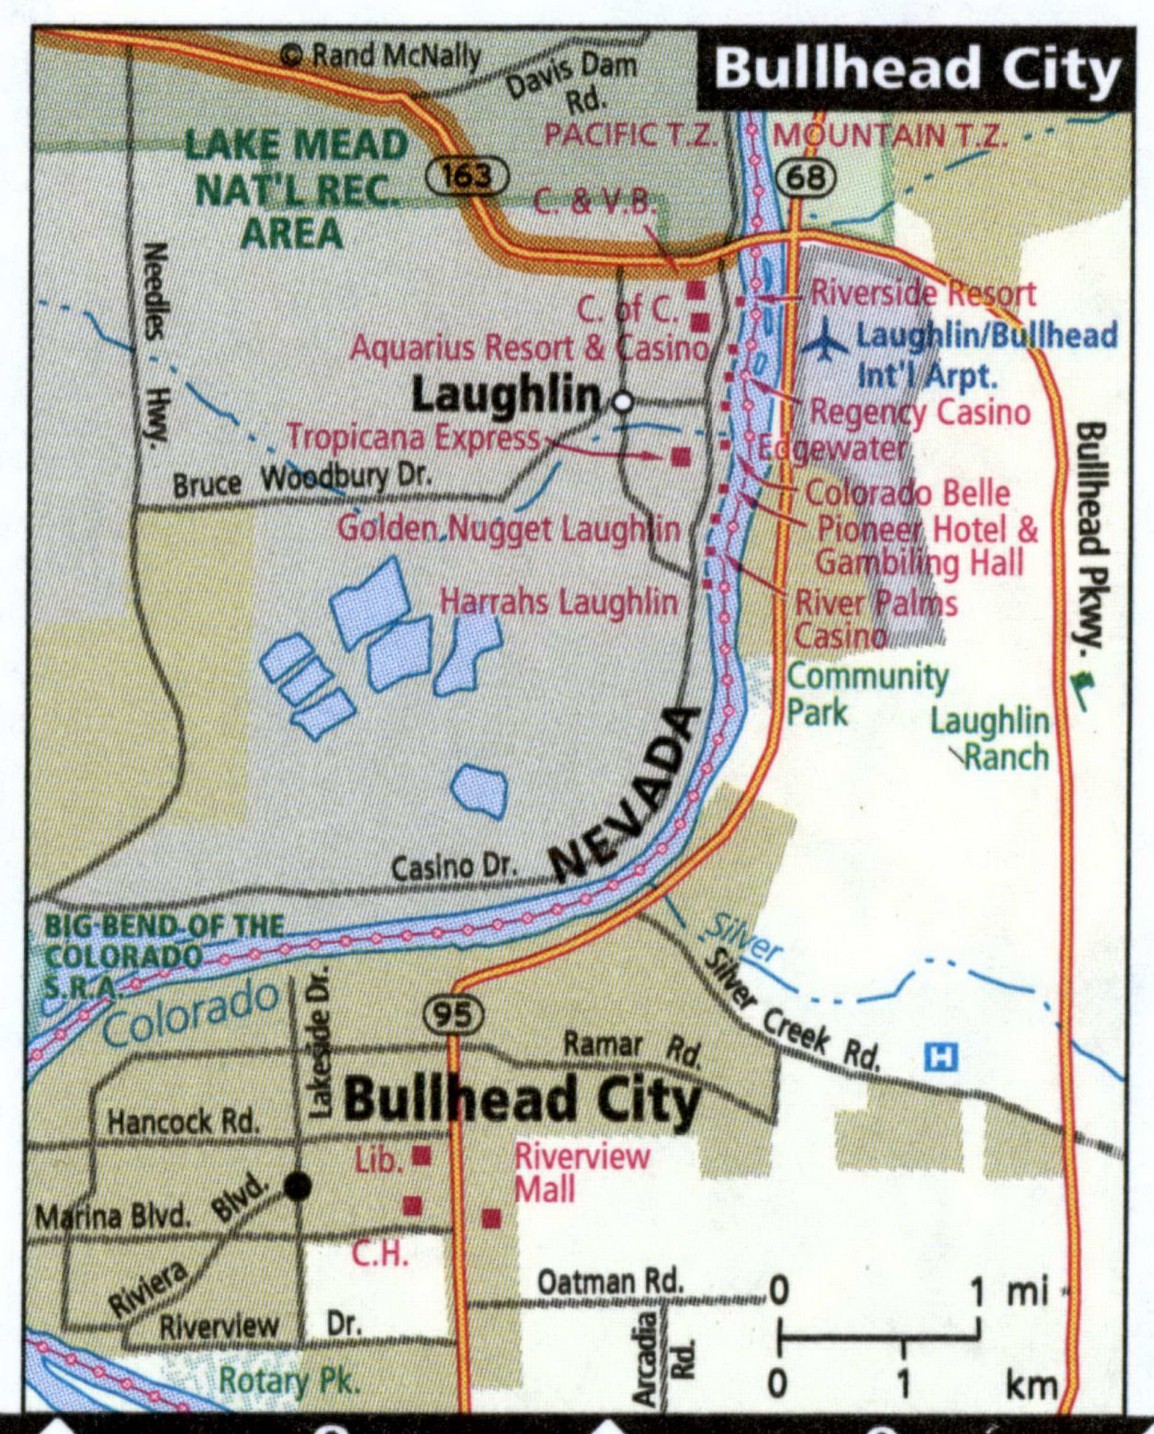 Bullhead city map for truckers